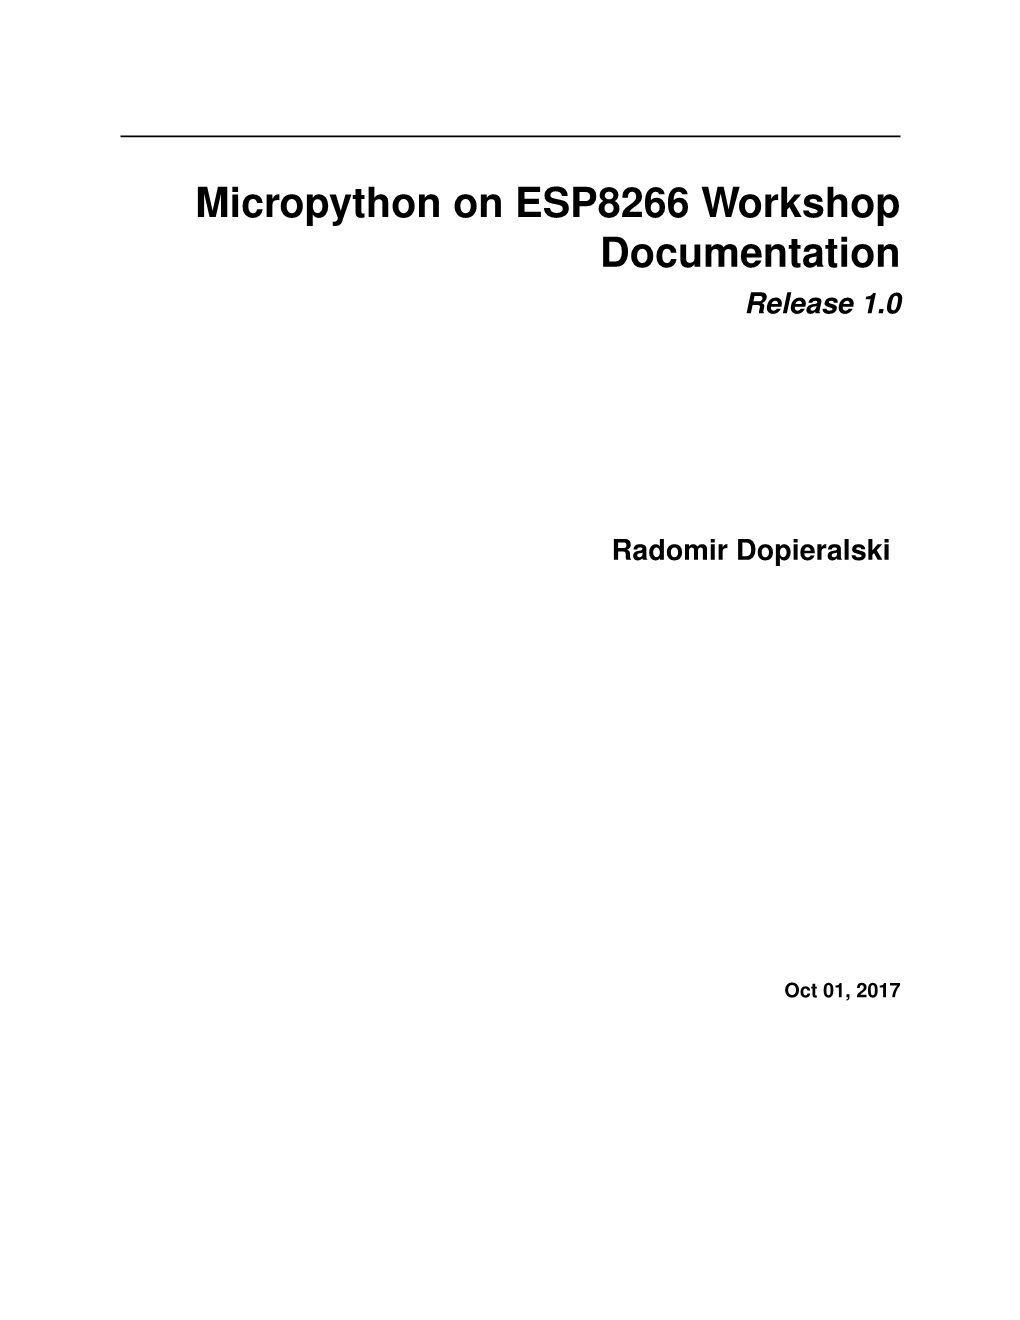 Micropython on ESP8266 Workshop Documentation Release 1.0